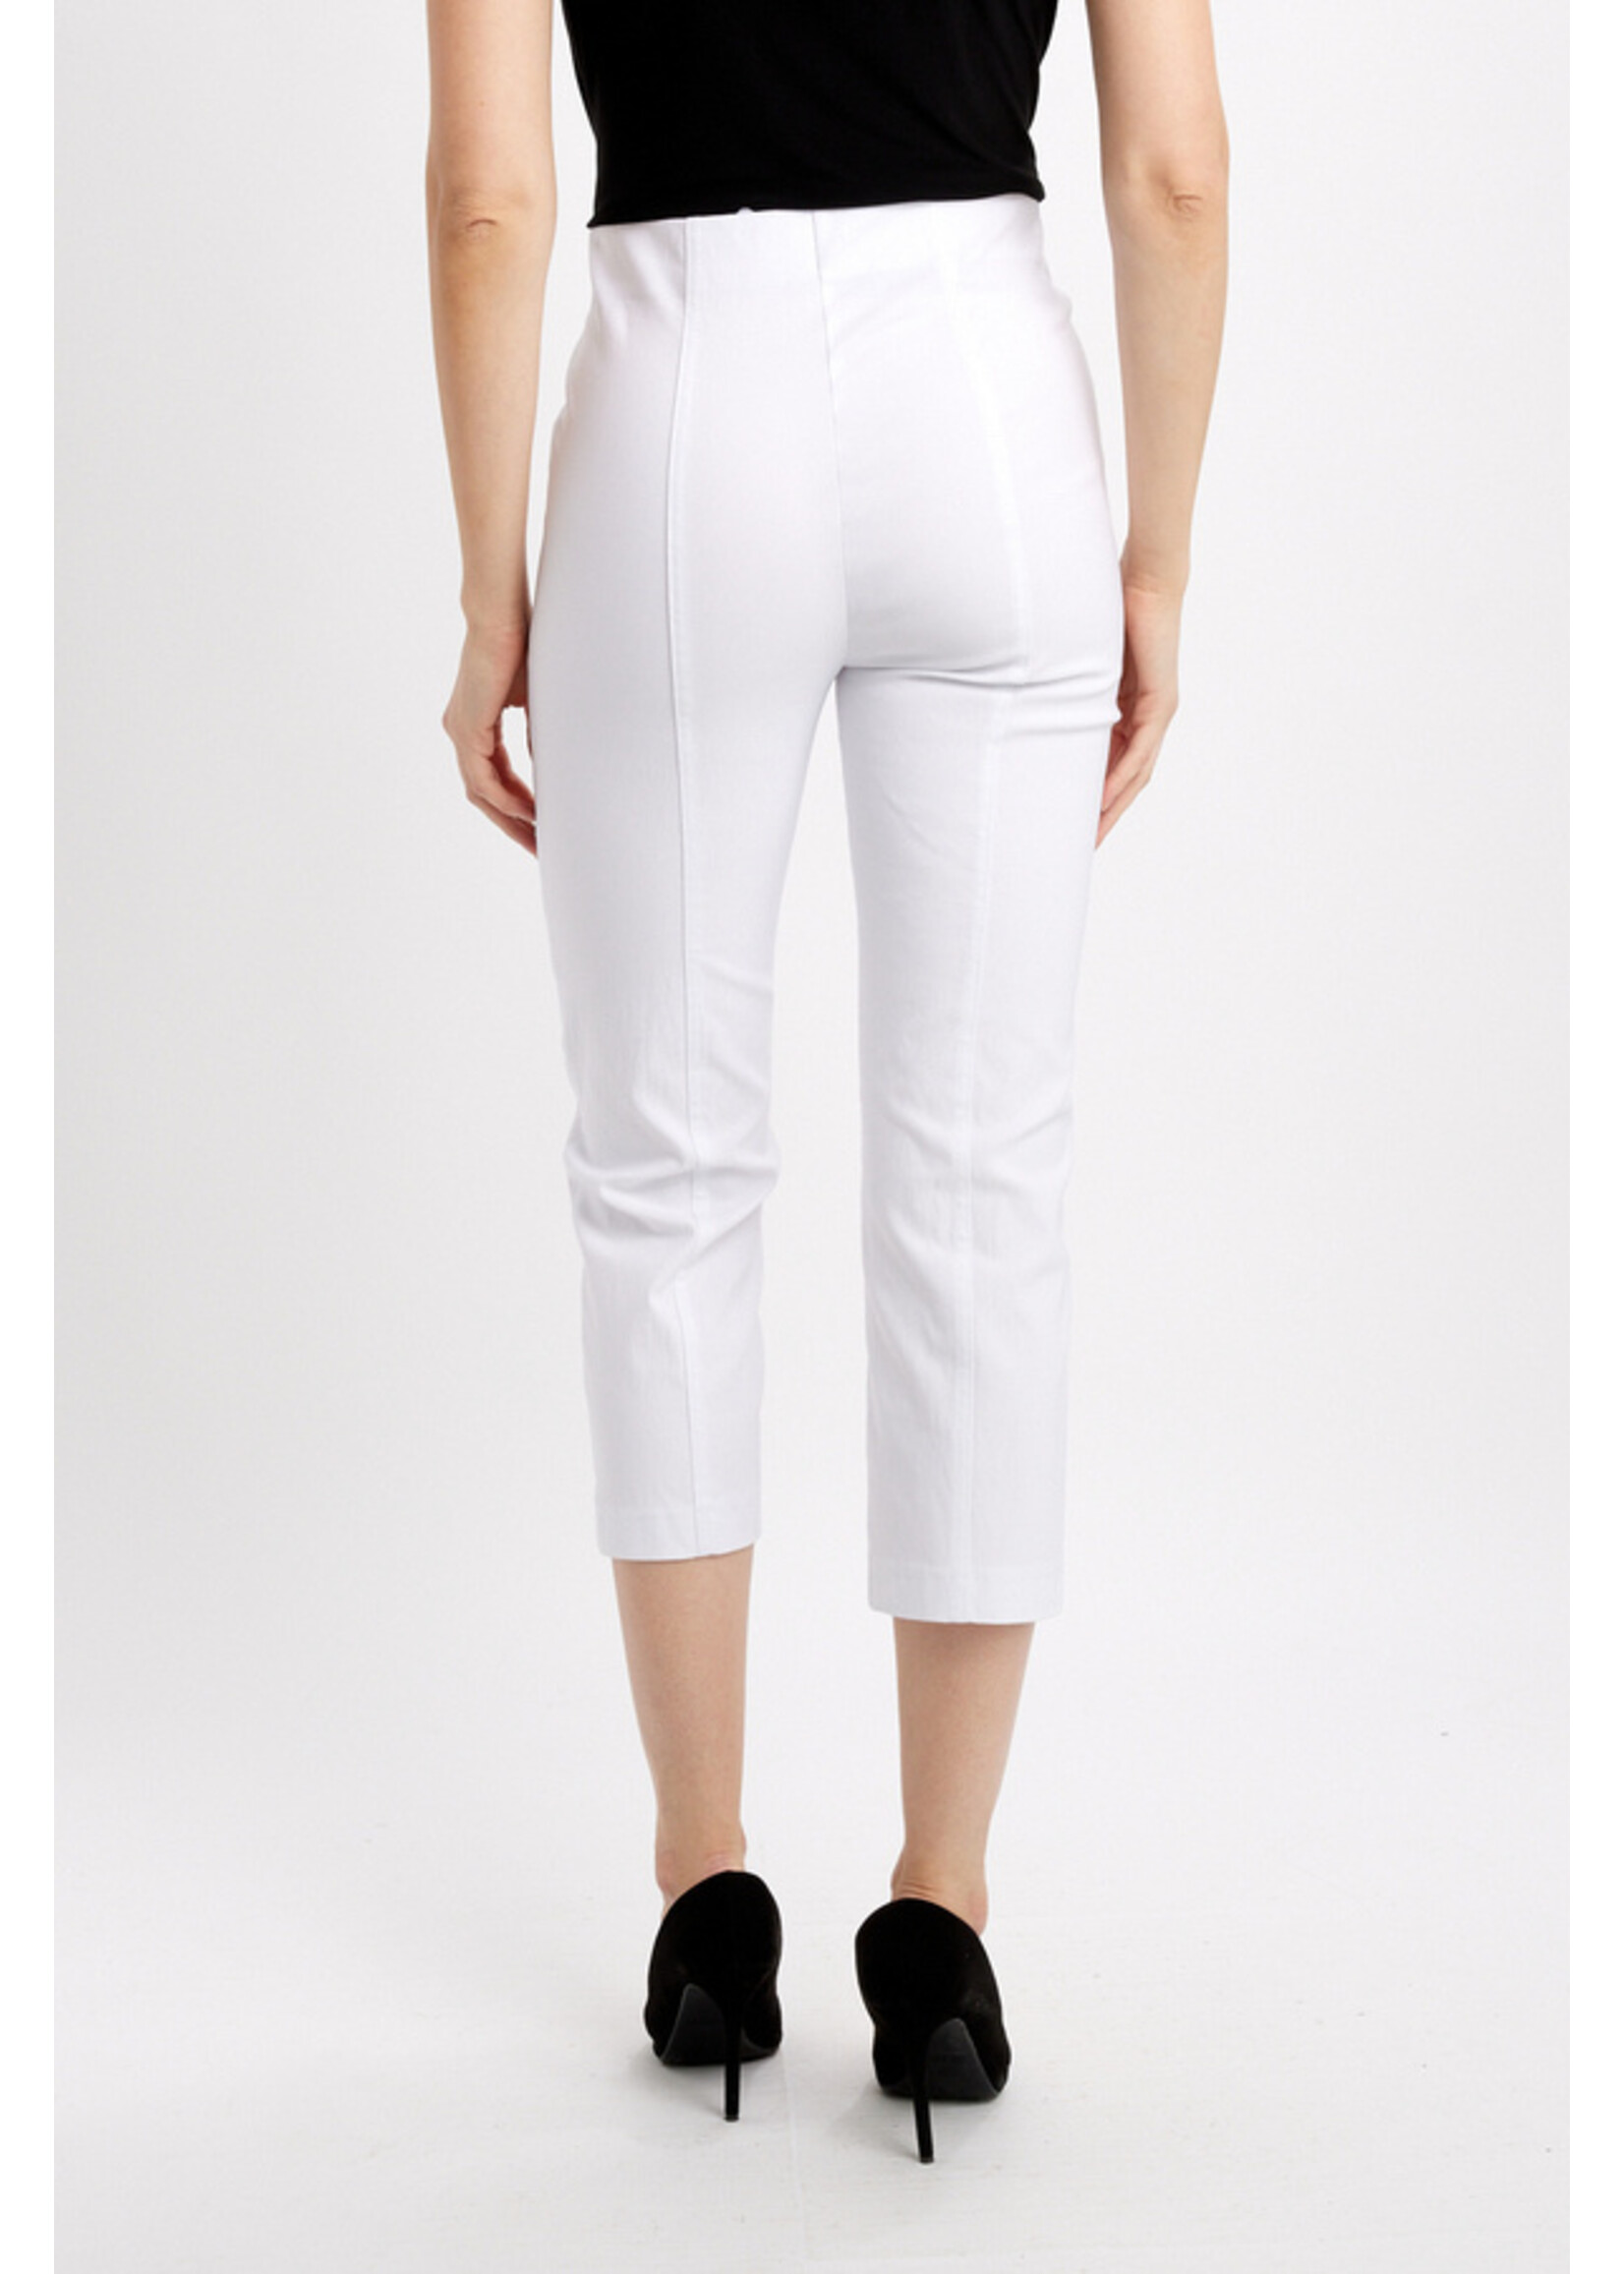 Joseph Ribkoff Multi-pocket Straight Leg Pants Style 241163